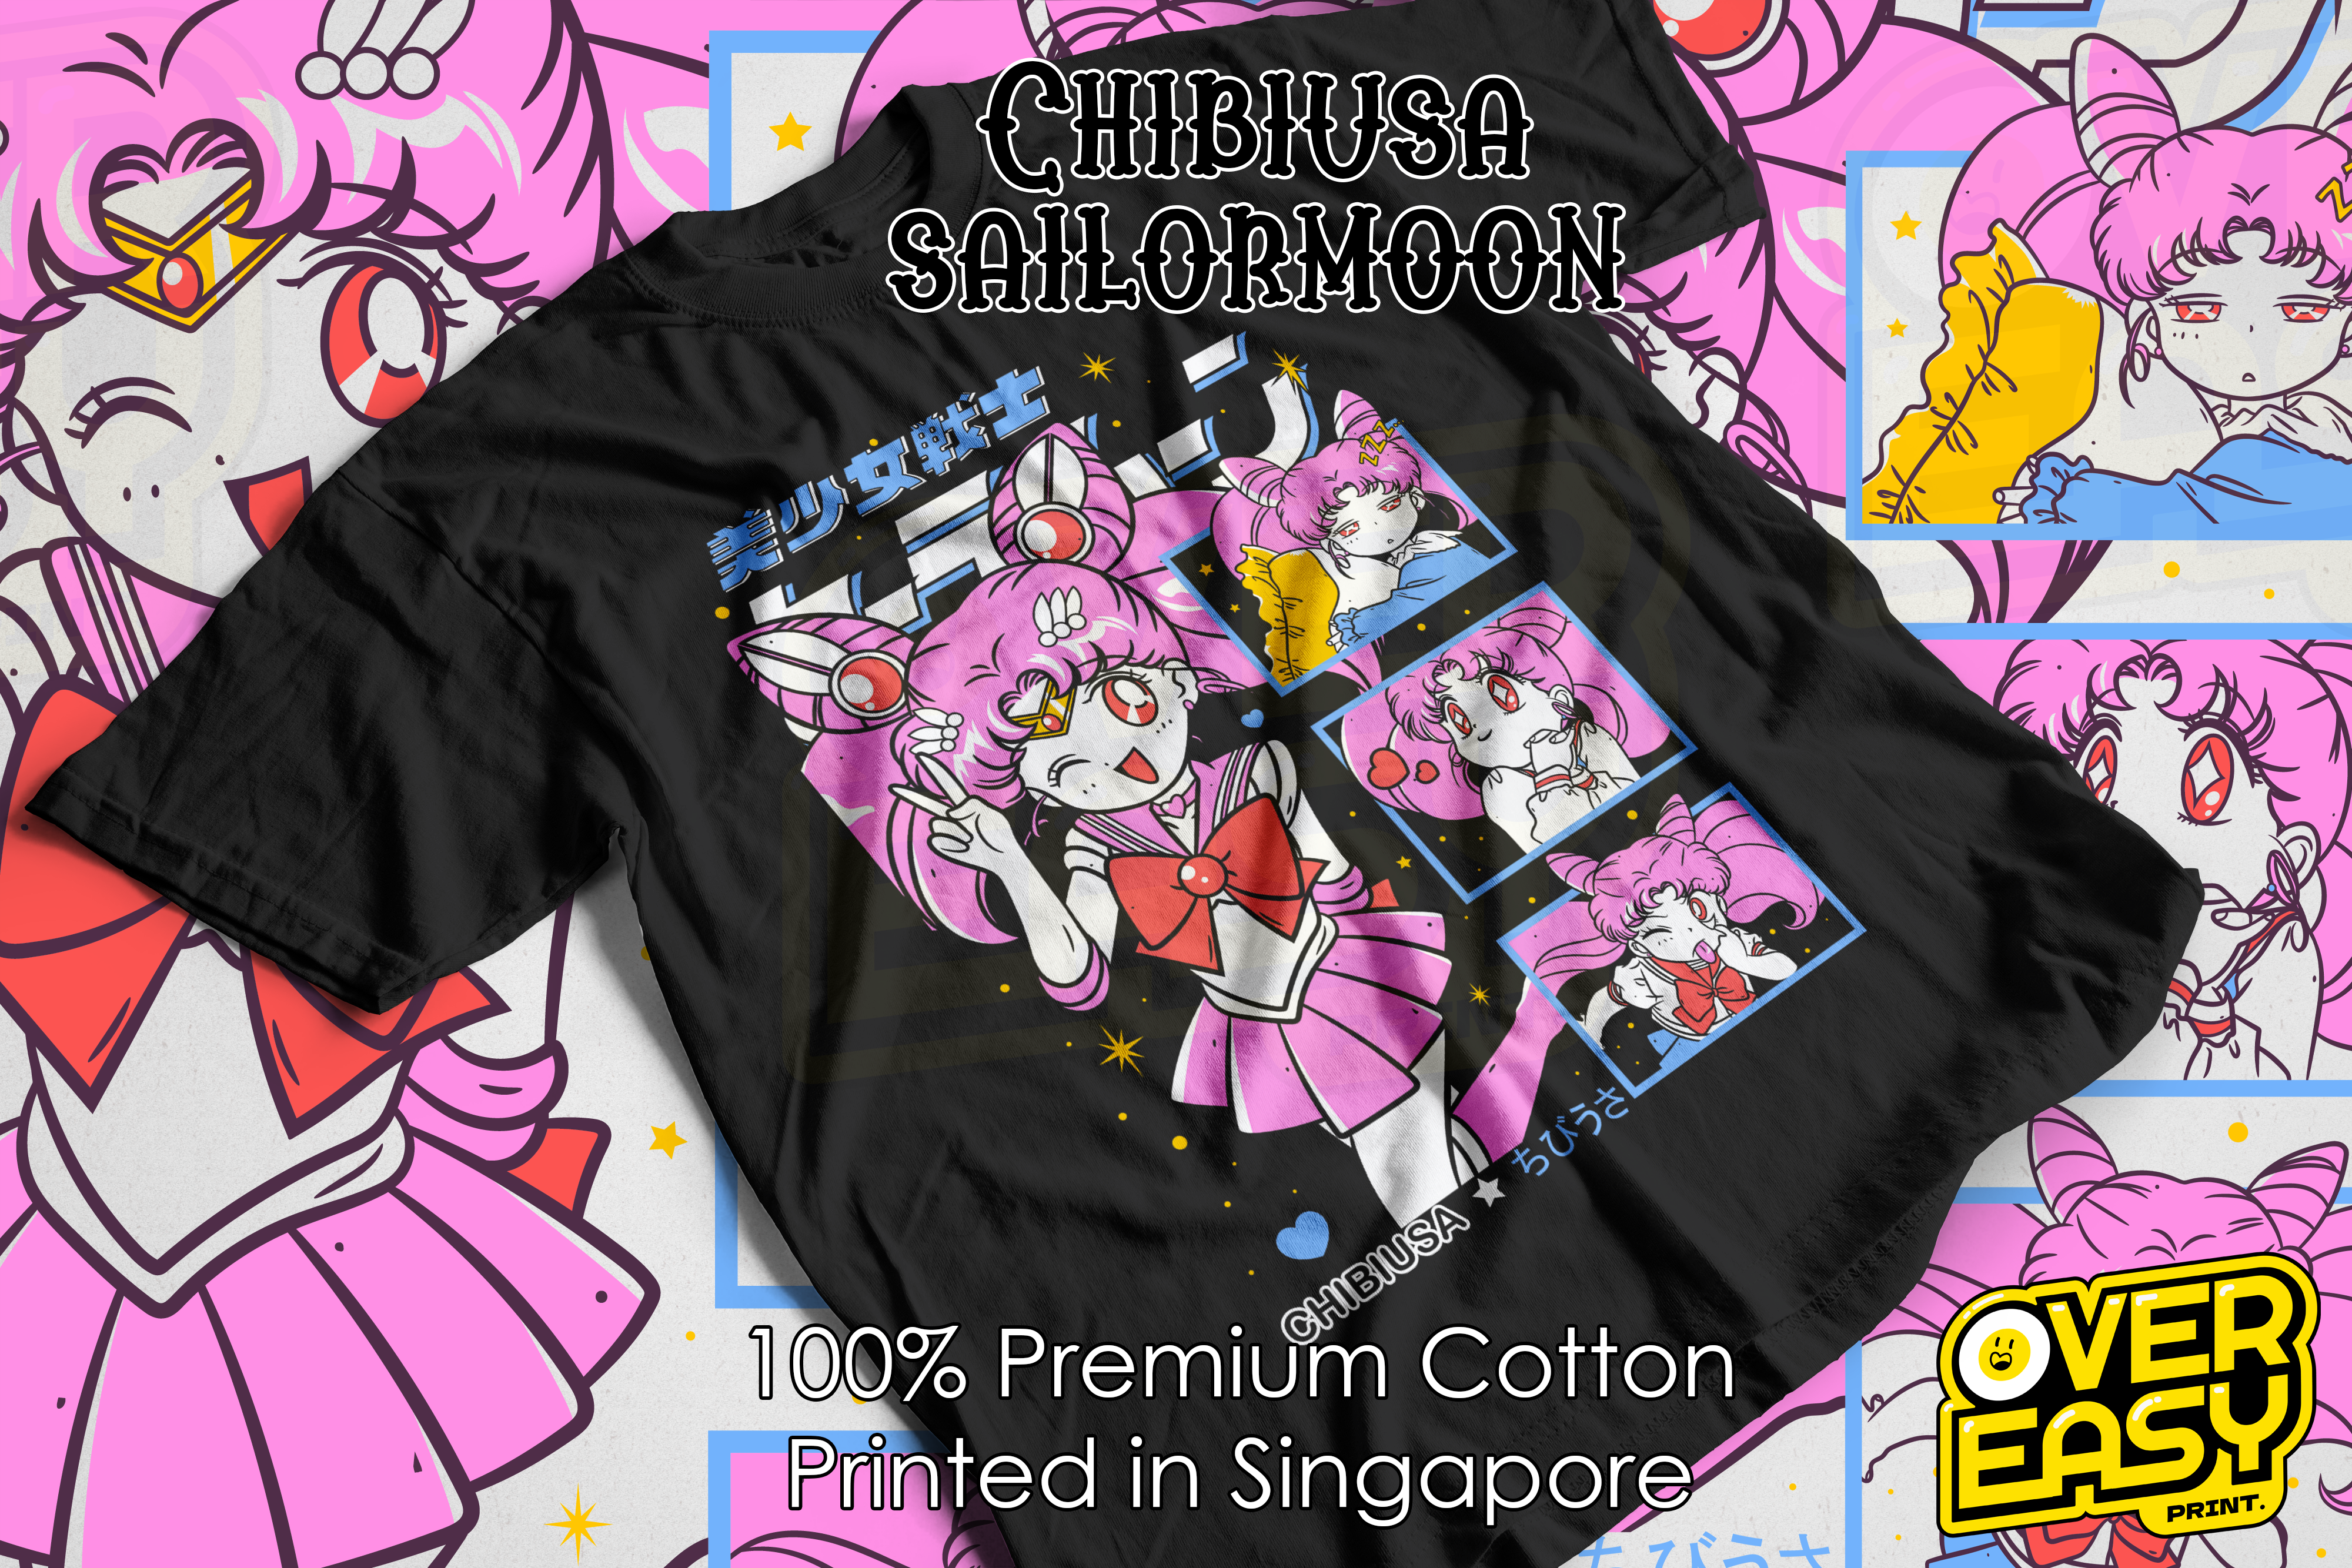 Chibiusa Sailormoon Anime Fanart T-Shirt